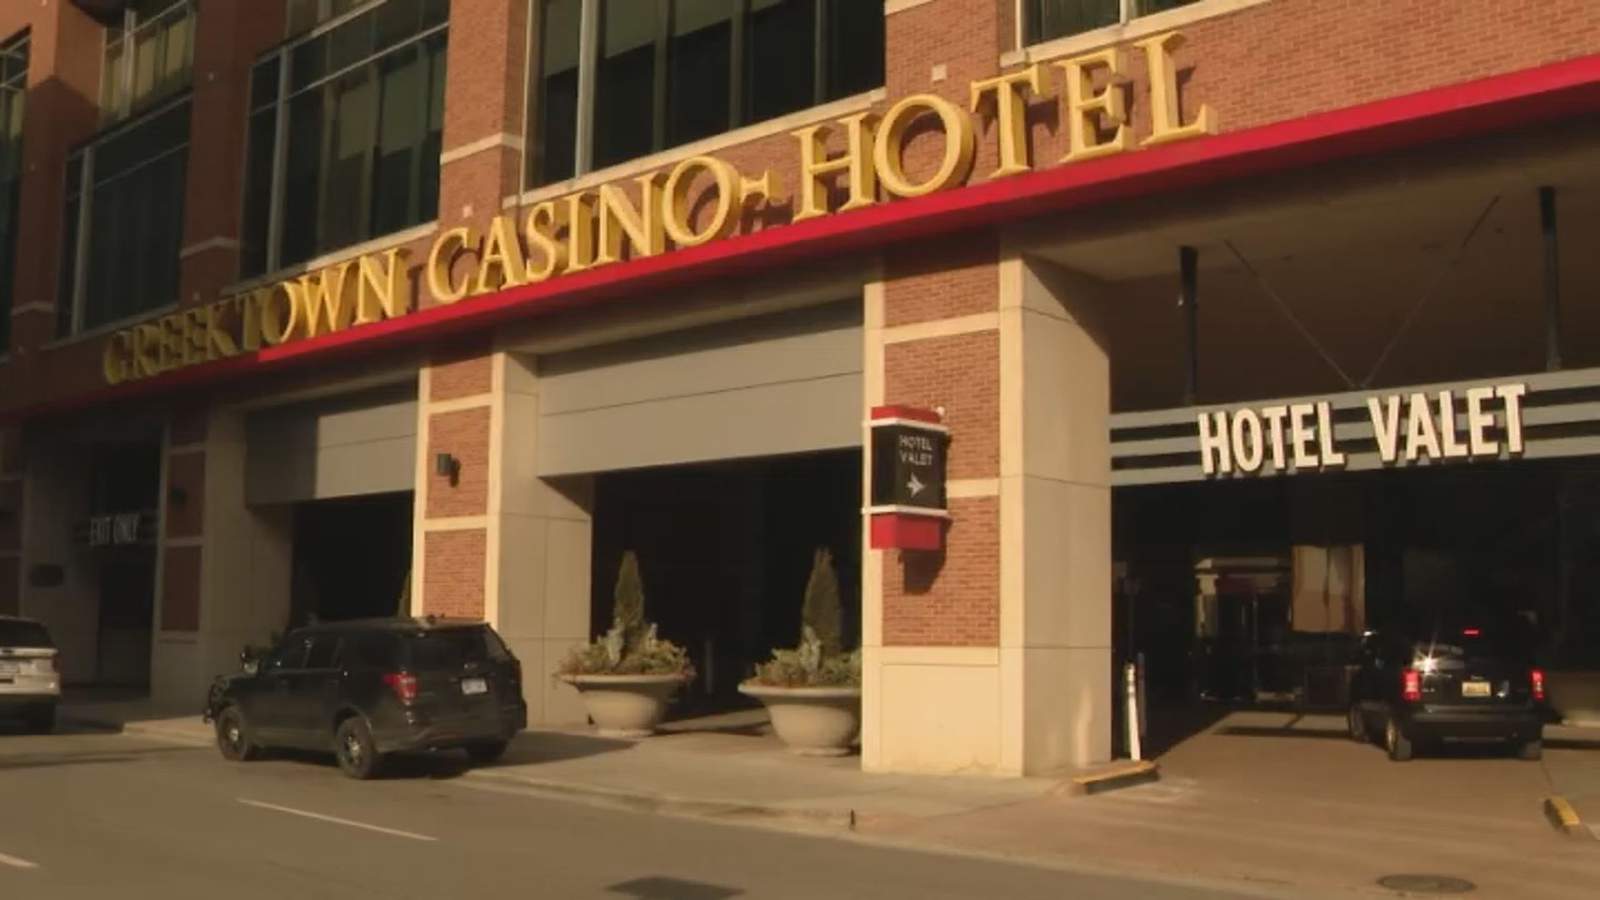 Detroit police arrest 2 men after high-powered weapon found at Greektown Casino Hotel, chief says